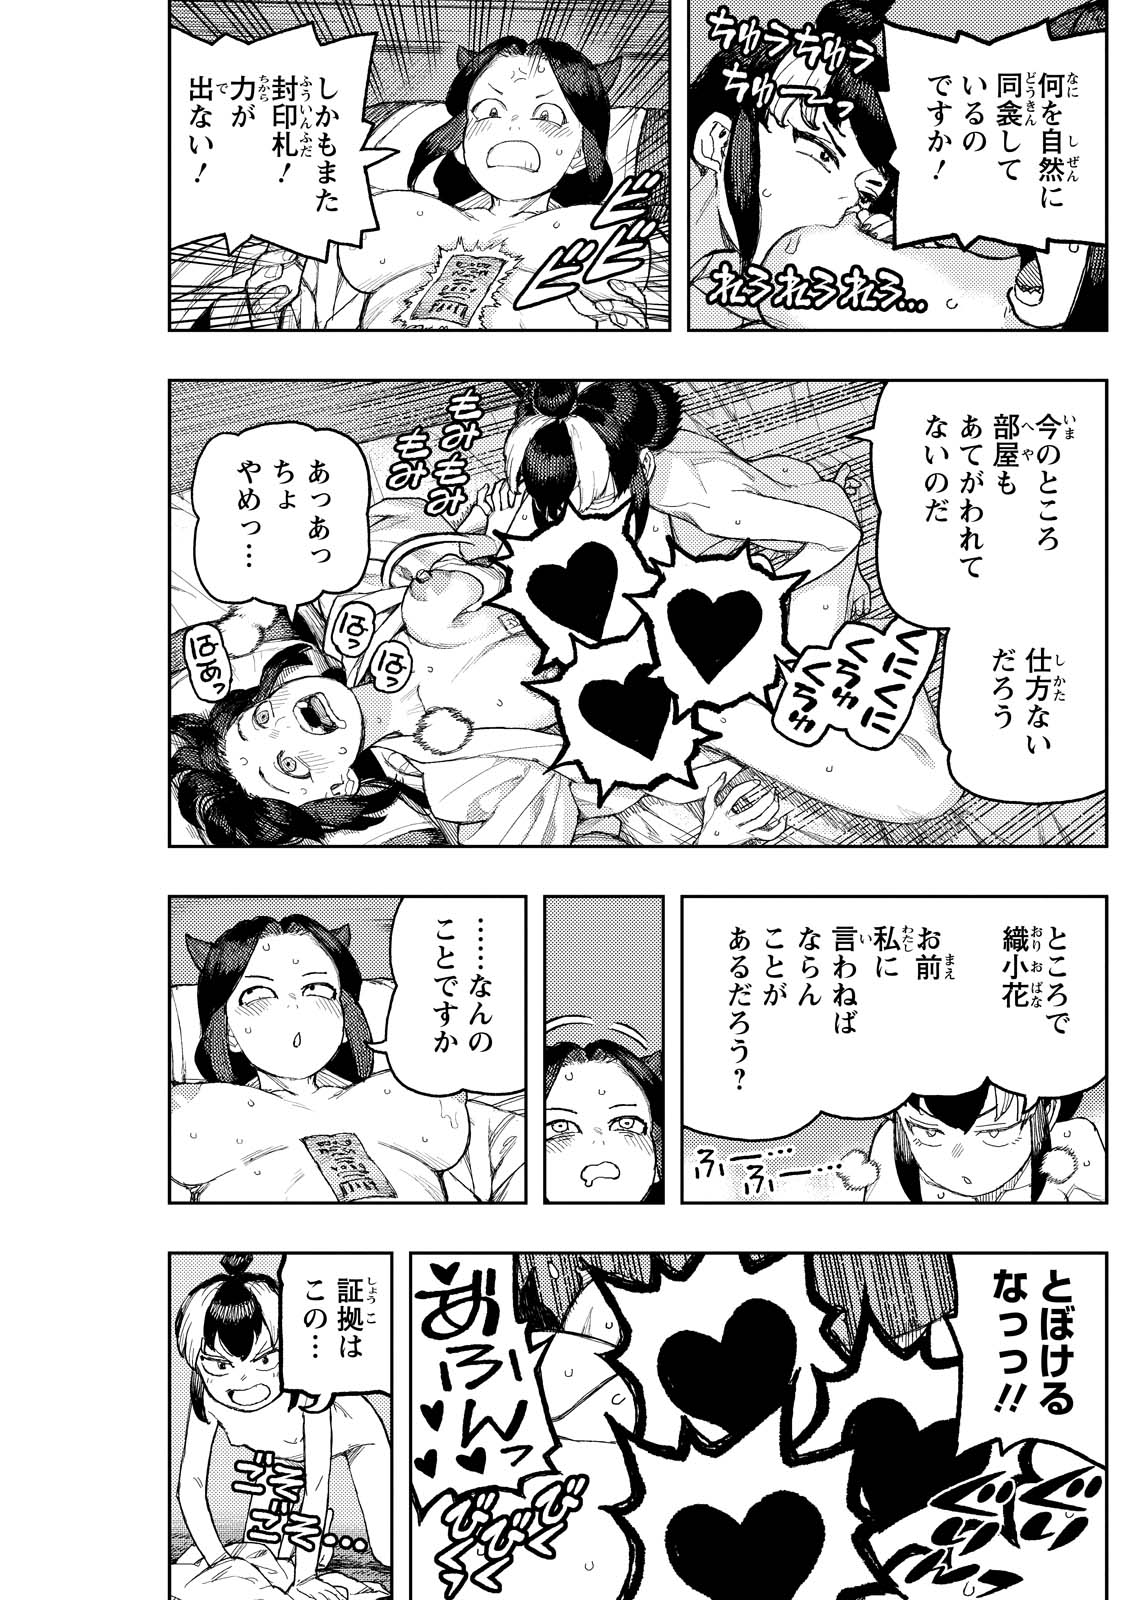 Tsugumomo - Chapter 169 - Page 7